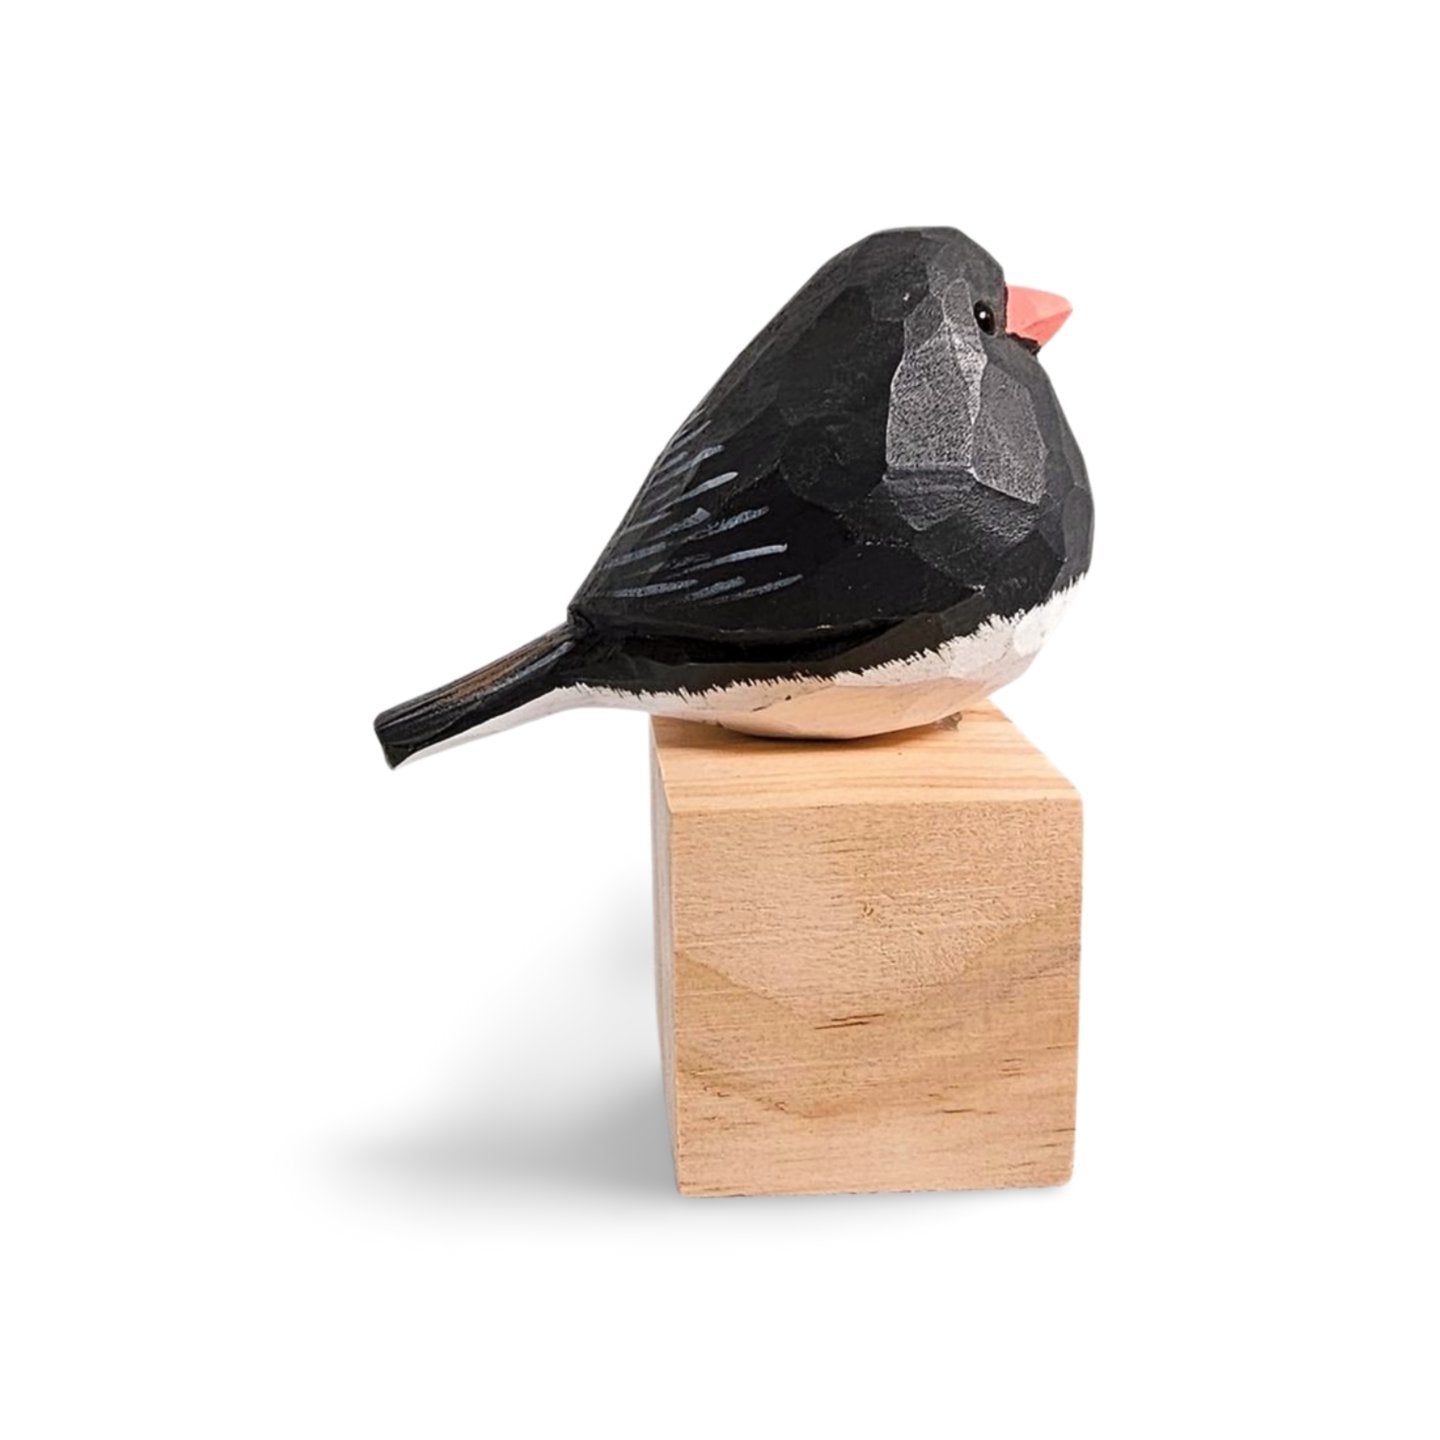 Junco Sculpted Hand-Painted Bird Figure - Wooden Islands